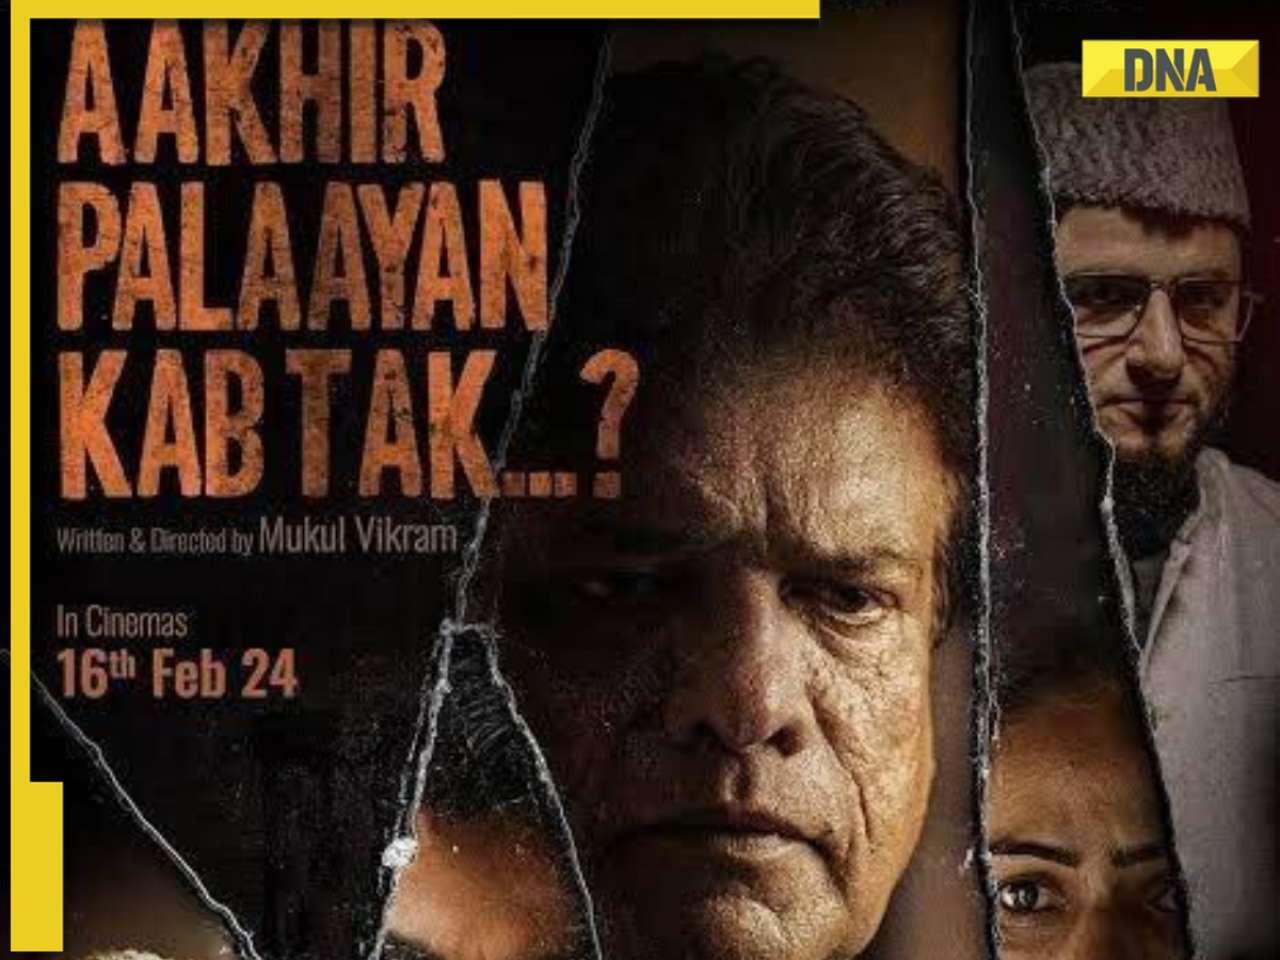 Aakhir Palaayan Kab Tak Box Office Update: Rs 10.16 crore in 3 weeks, Rajesh Sharma’s drama thriller shows steady growth